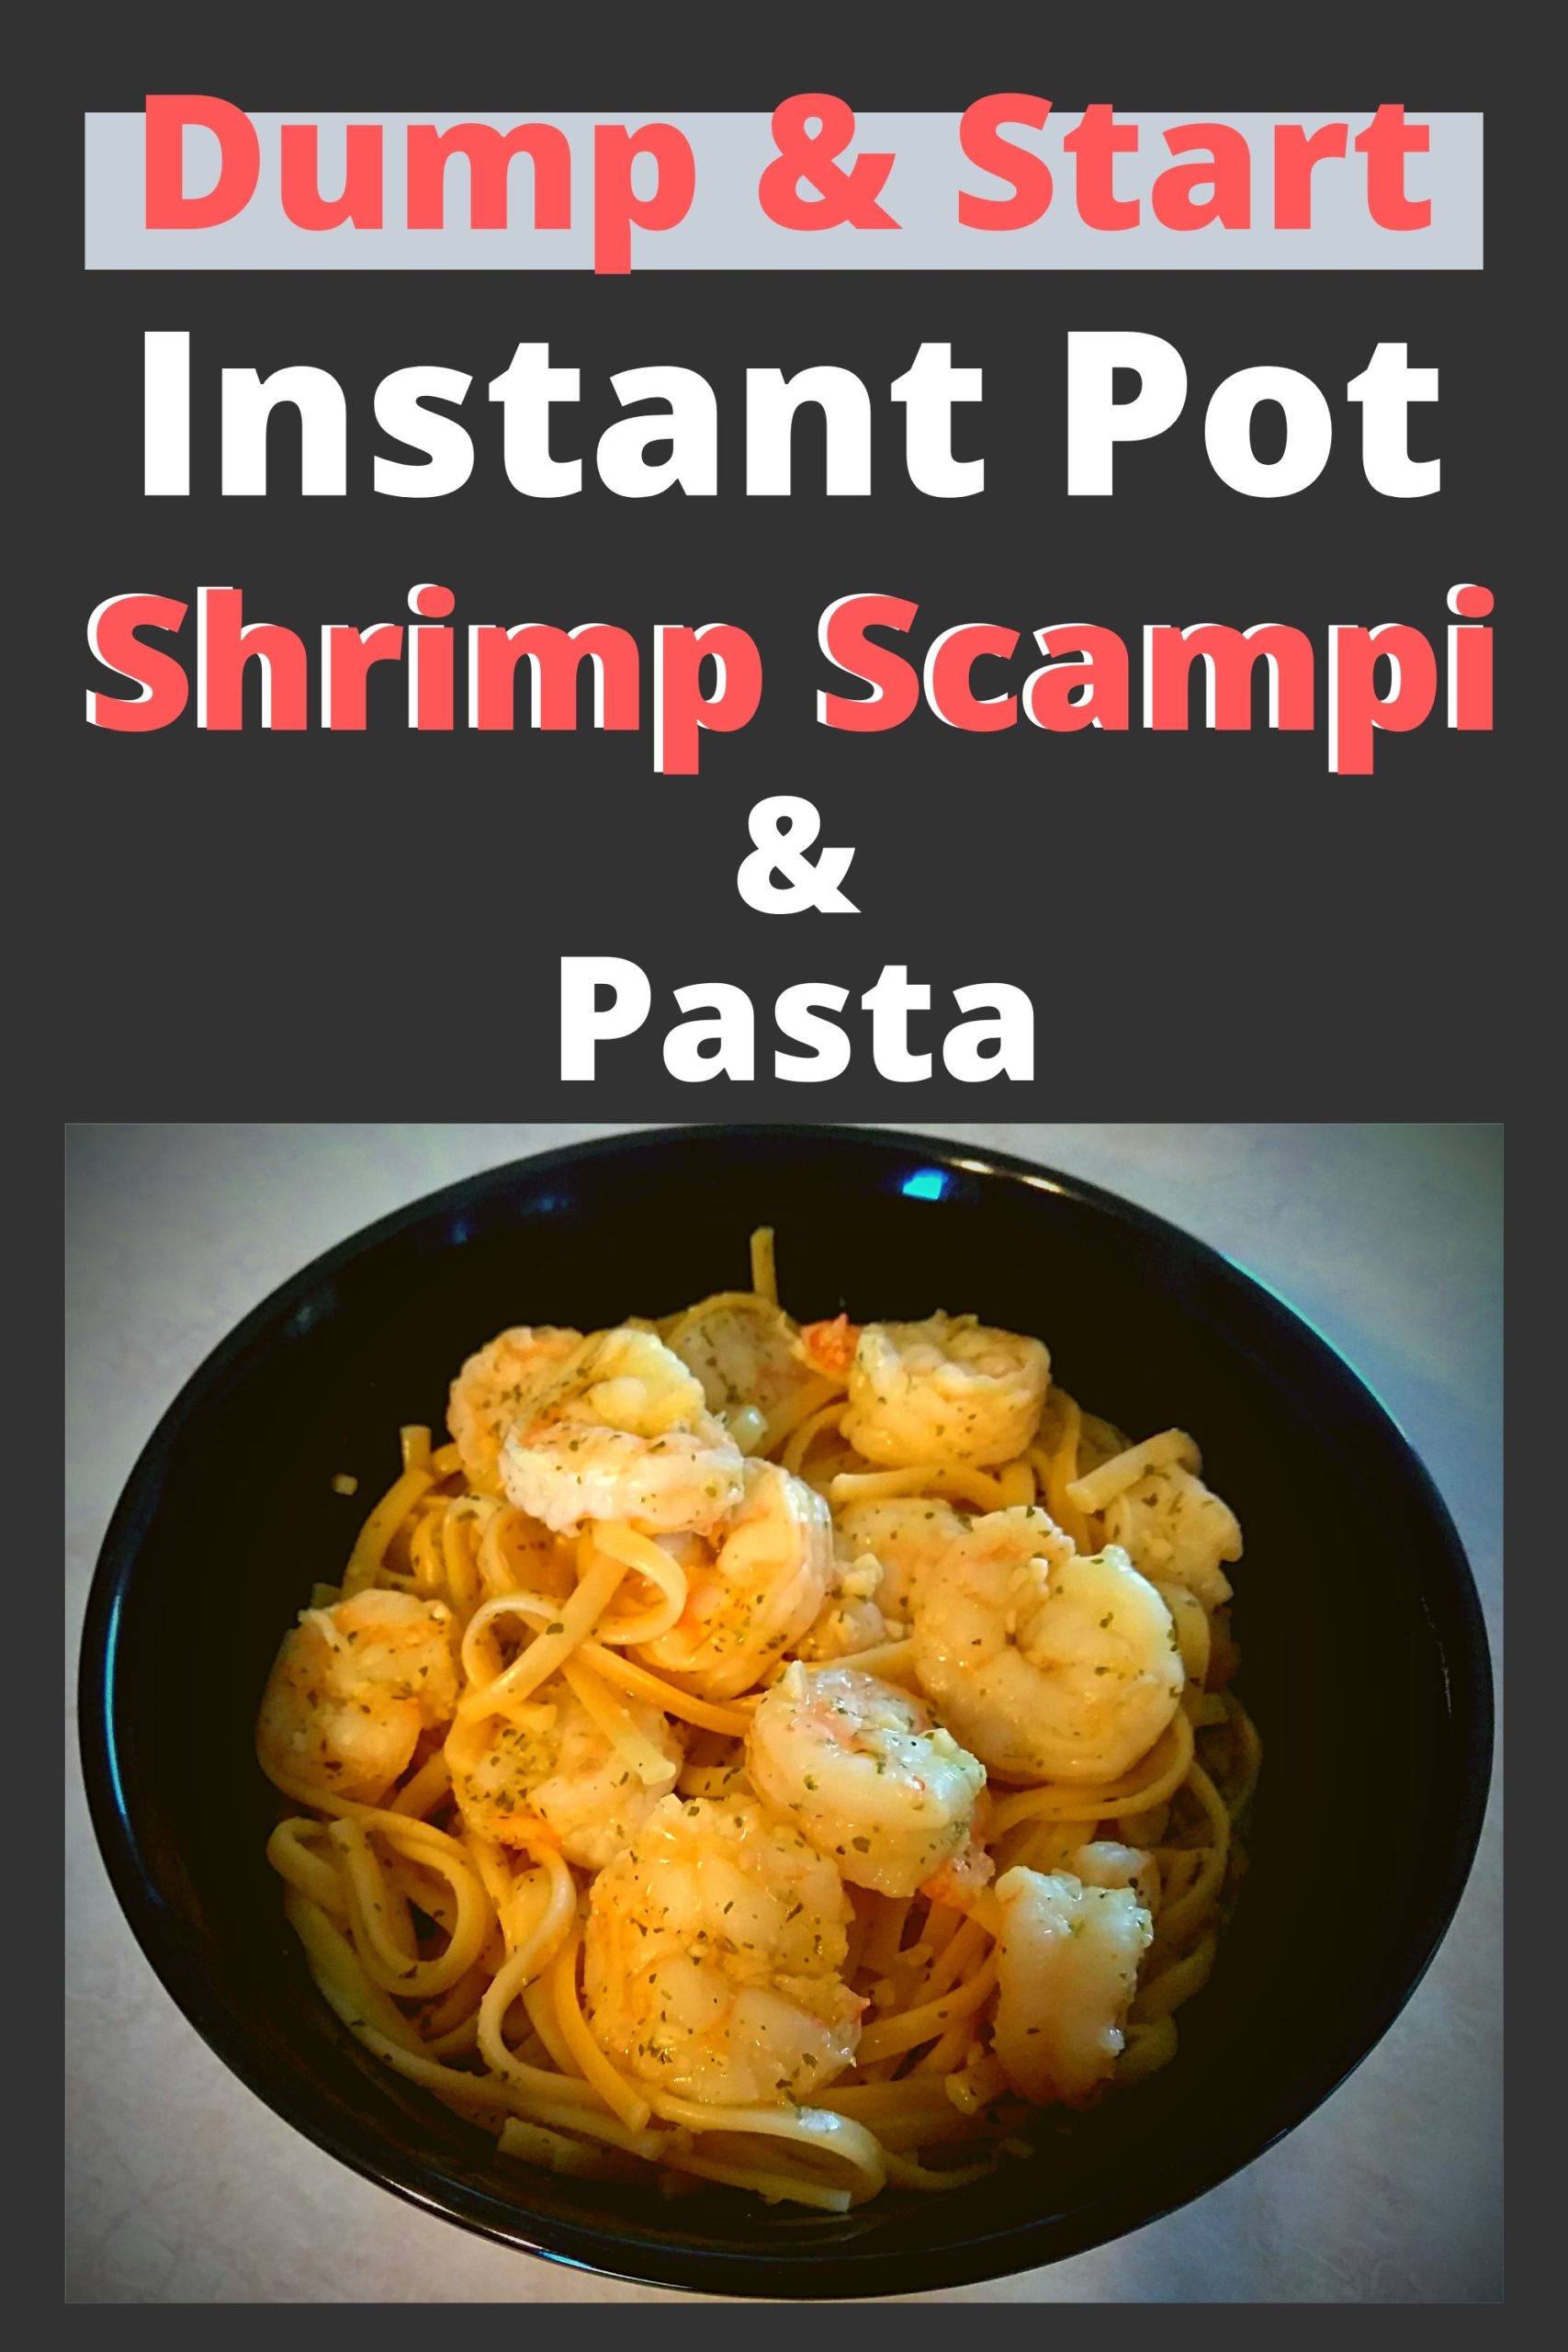 A black bowl filled with instant pot shrimp scampi with linguini pasta